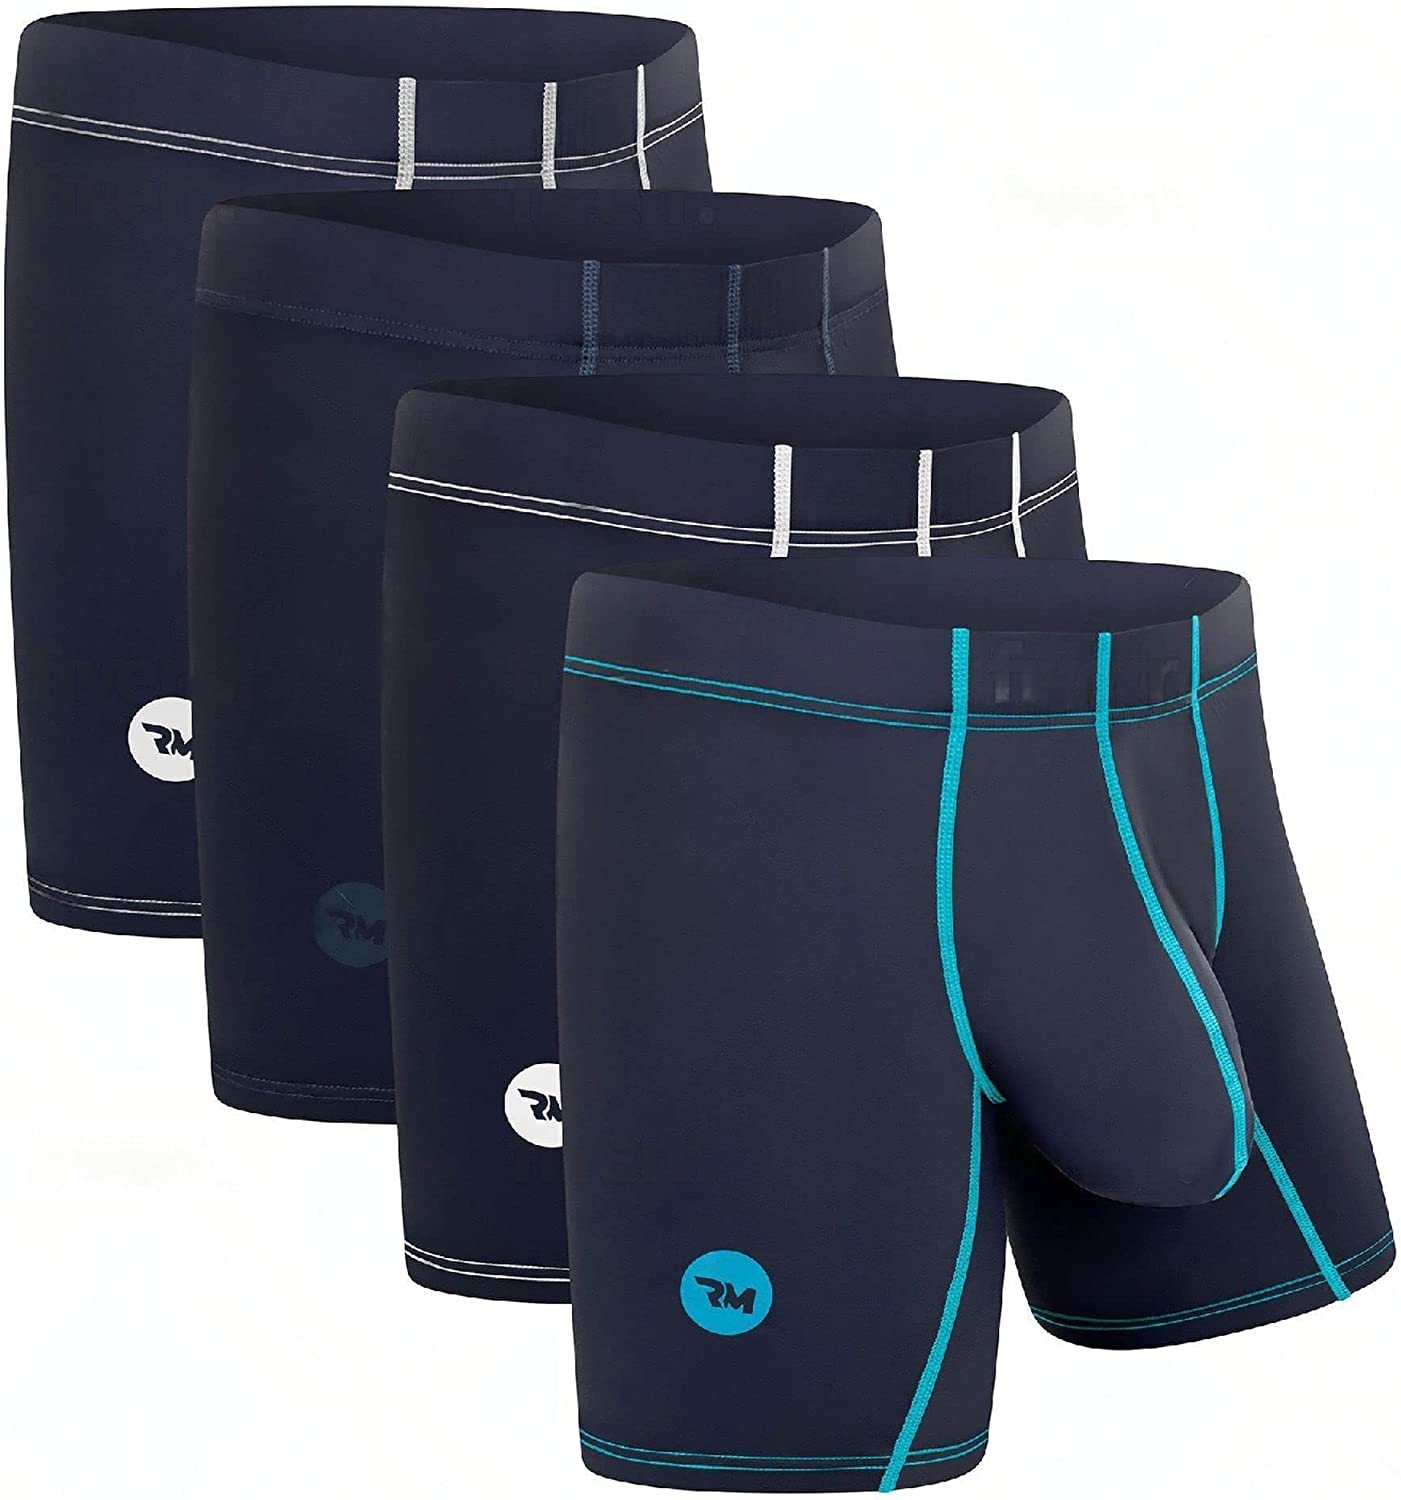 Gubotare Captain Underpants Men's Enhancing Underwear Briefs Ice Silk Big Ball  Pouch Briefs for Male Pack,Black S 